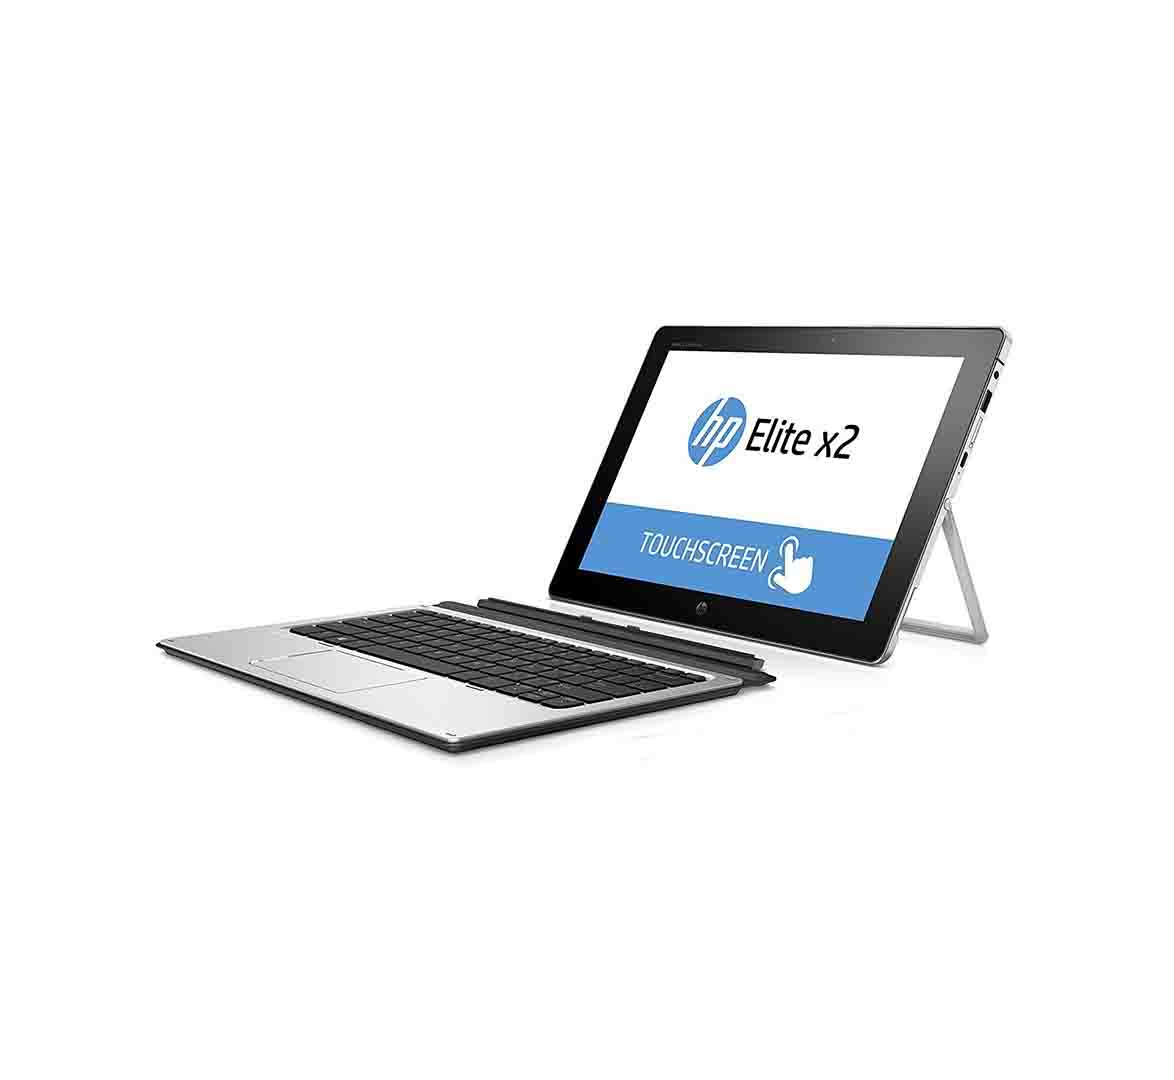 HP Elite x2 1012 G1 Business Laptop ، وحدة المعالجة المركزية Intel Core m7-6Y75 ، 8 جيجا بايت رام ، 256 جيجا بايت SSD ، شاشة تعمل باللمس 11.6 بوصة ، Windows 10 Pro